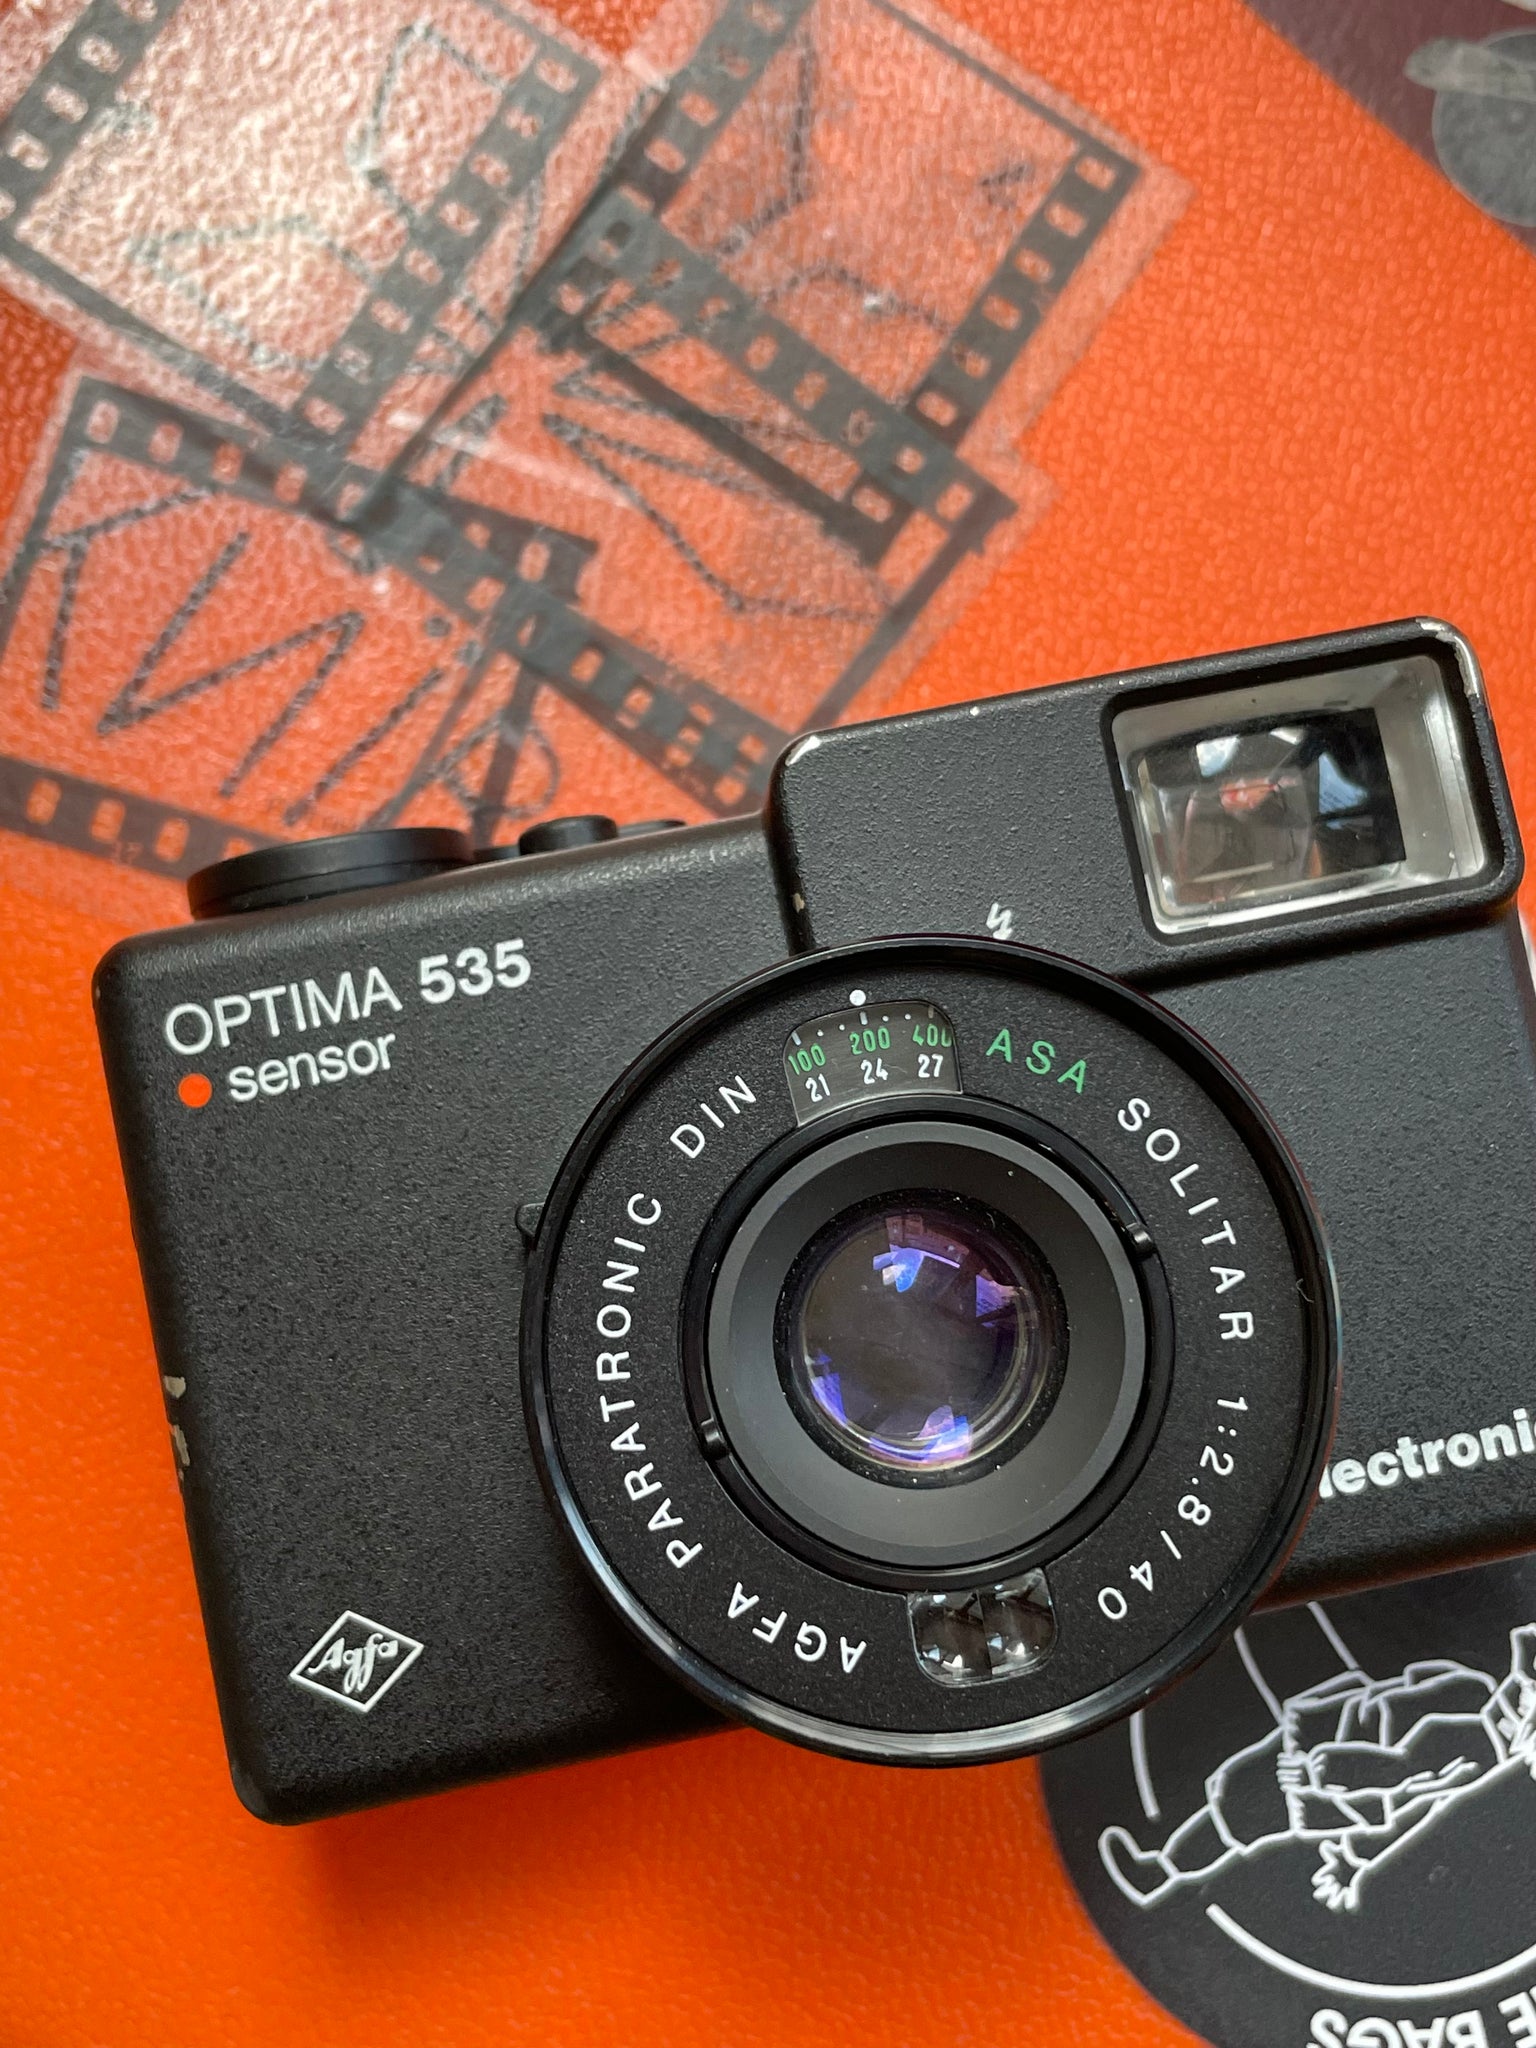 AGFA OPTIMA 535 sensor viewfinder 40mm camera